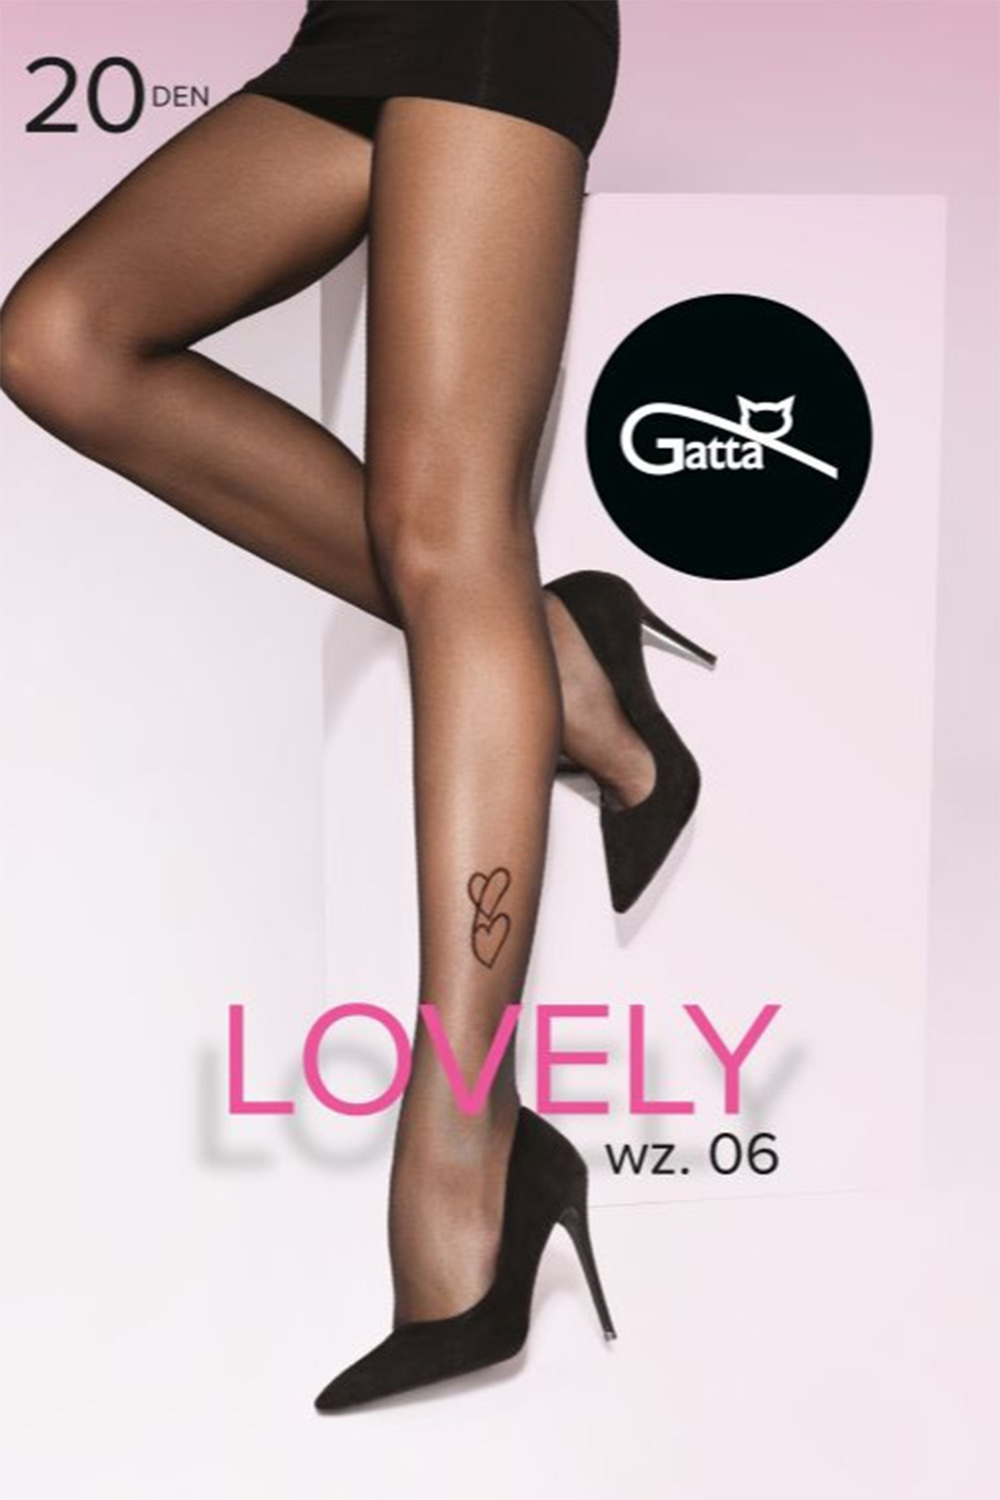 Gatta Lovely 06 20 DEN - nero